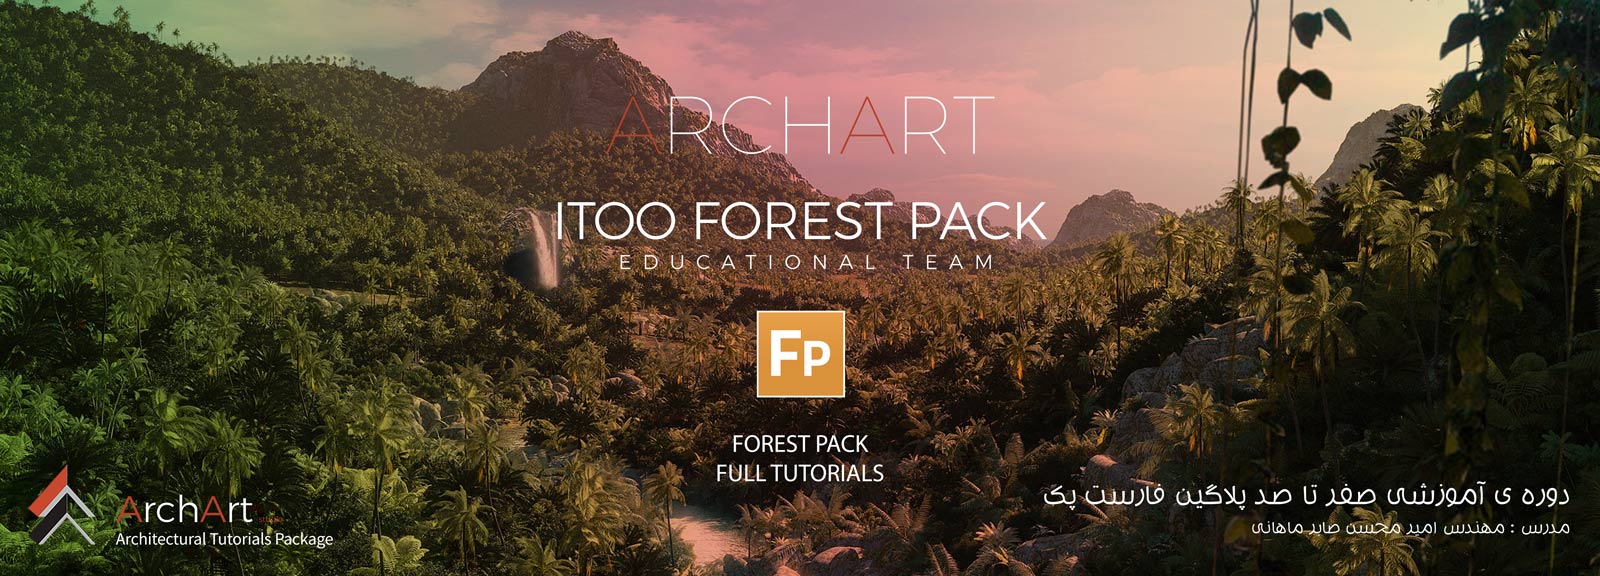 جلسه ی ششم پلاگین فارست پک - Itoo Forest Pack